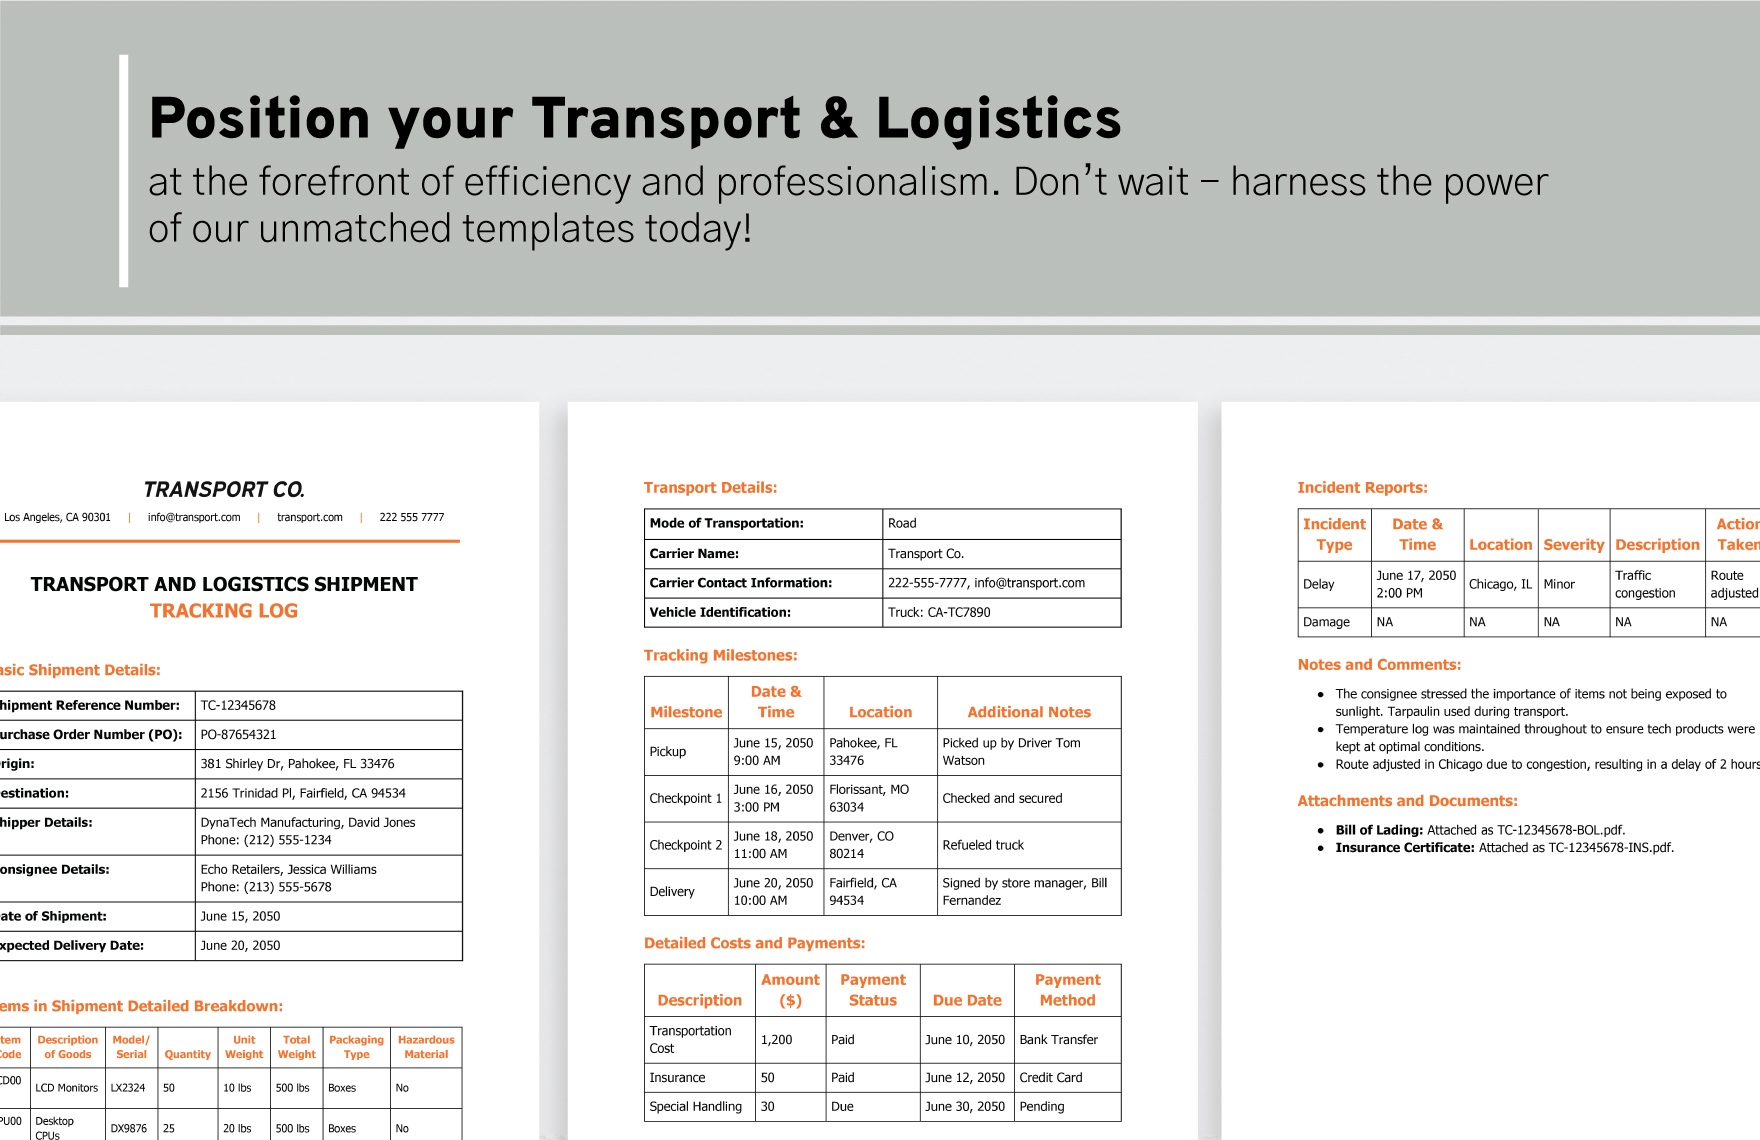 Transport and Logistics Shipment Tracking Log Template